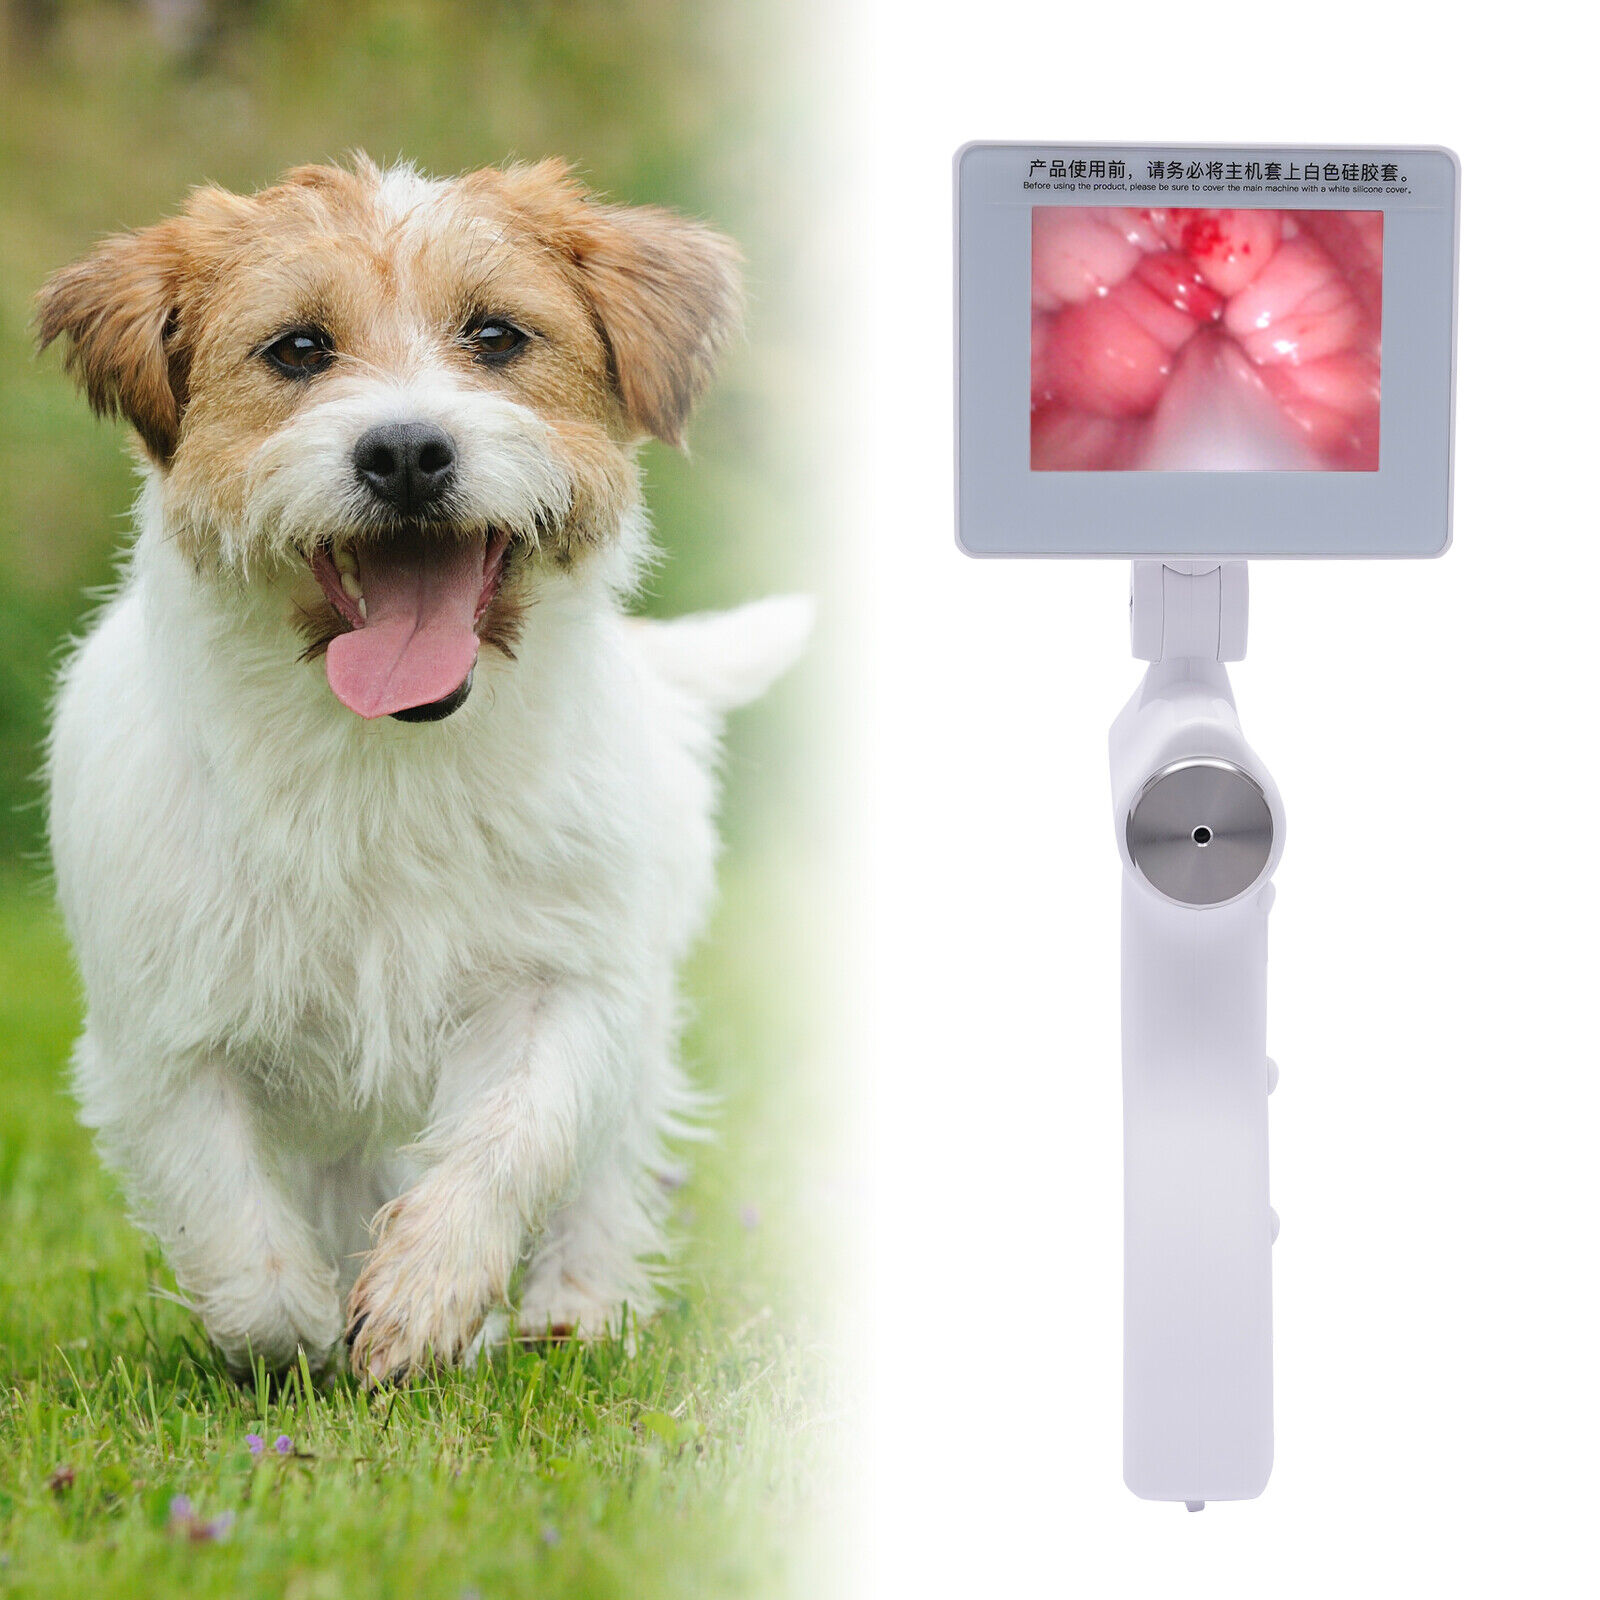 Visual Artificial Dog Insemination Gun Kit 5MP Camera + 20x Insemination Tubes Unbranded Does Not Apply - фотография #5